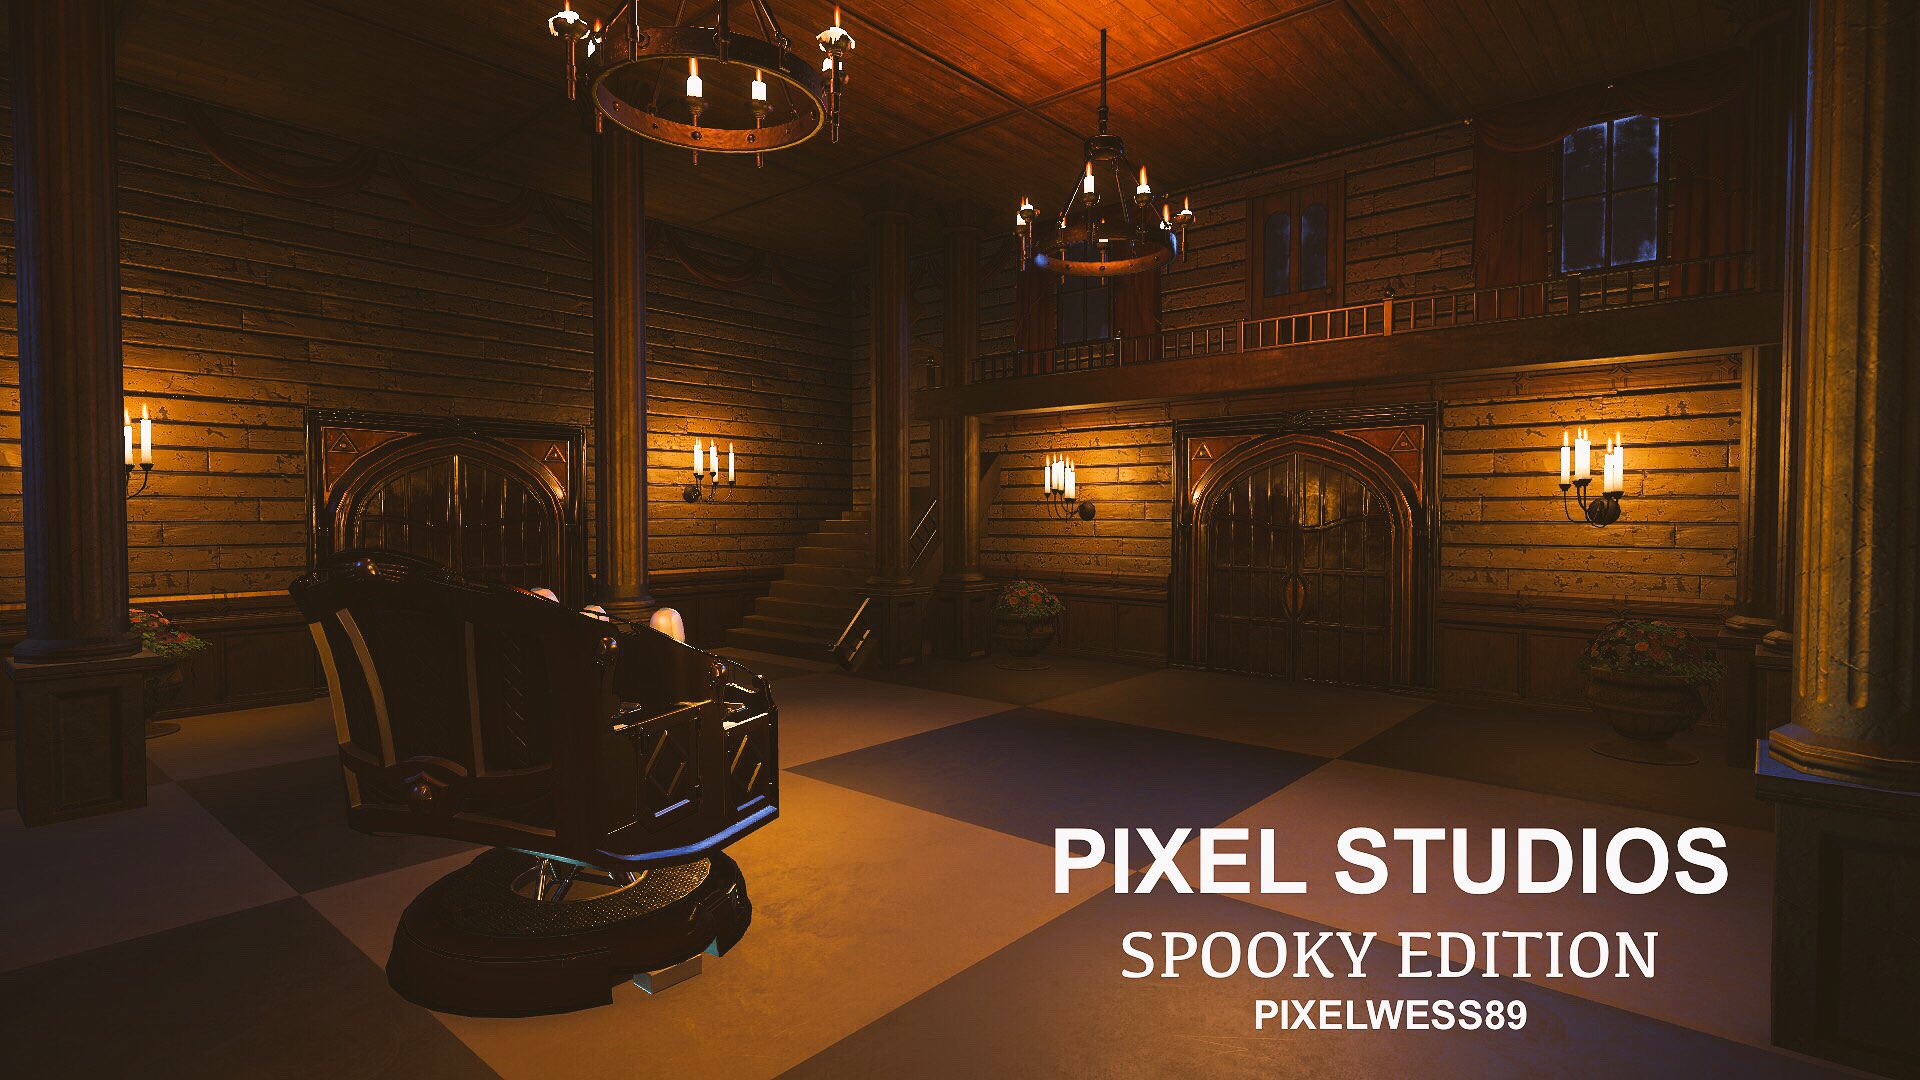 pixel studios